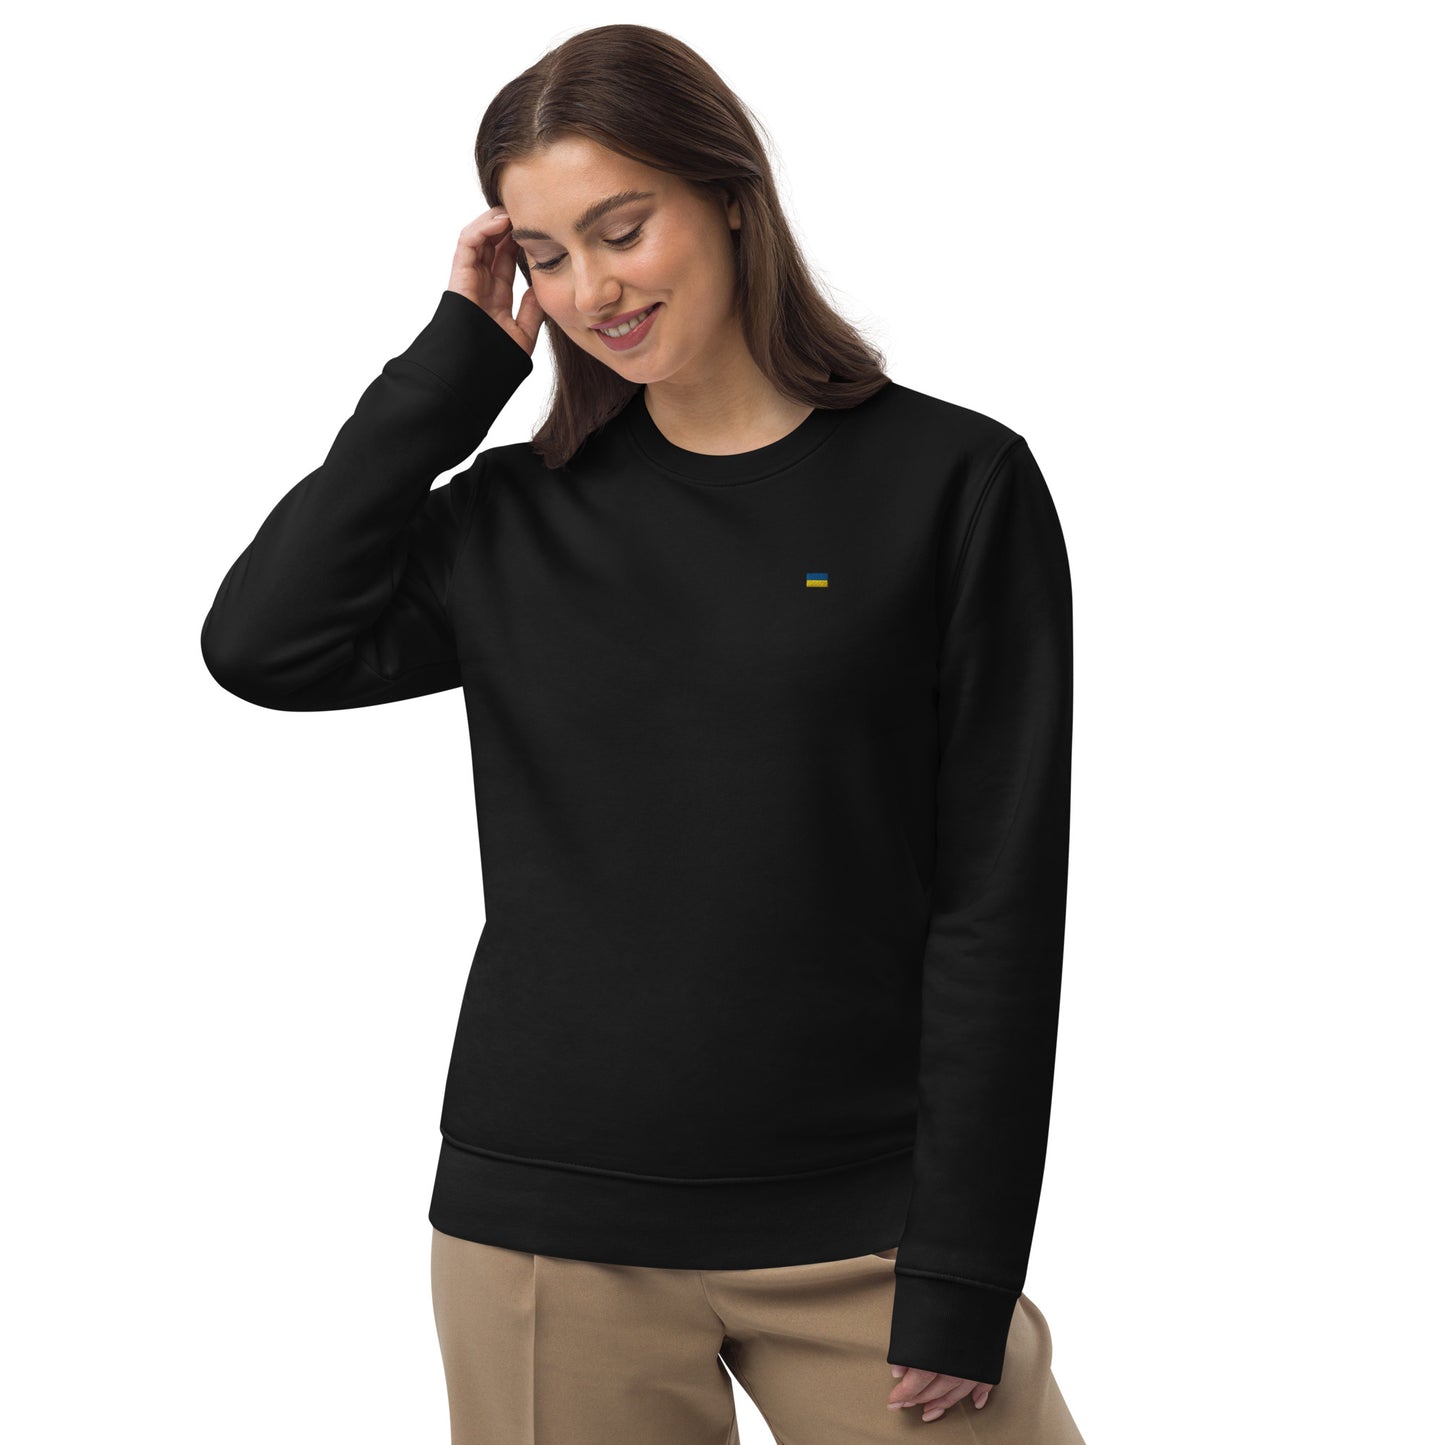 UA flag embroidered unisex eco sweatshirt in black